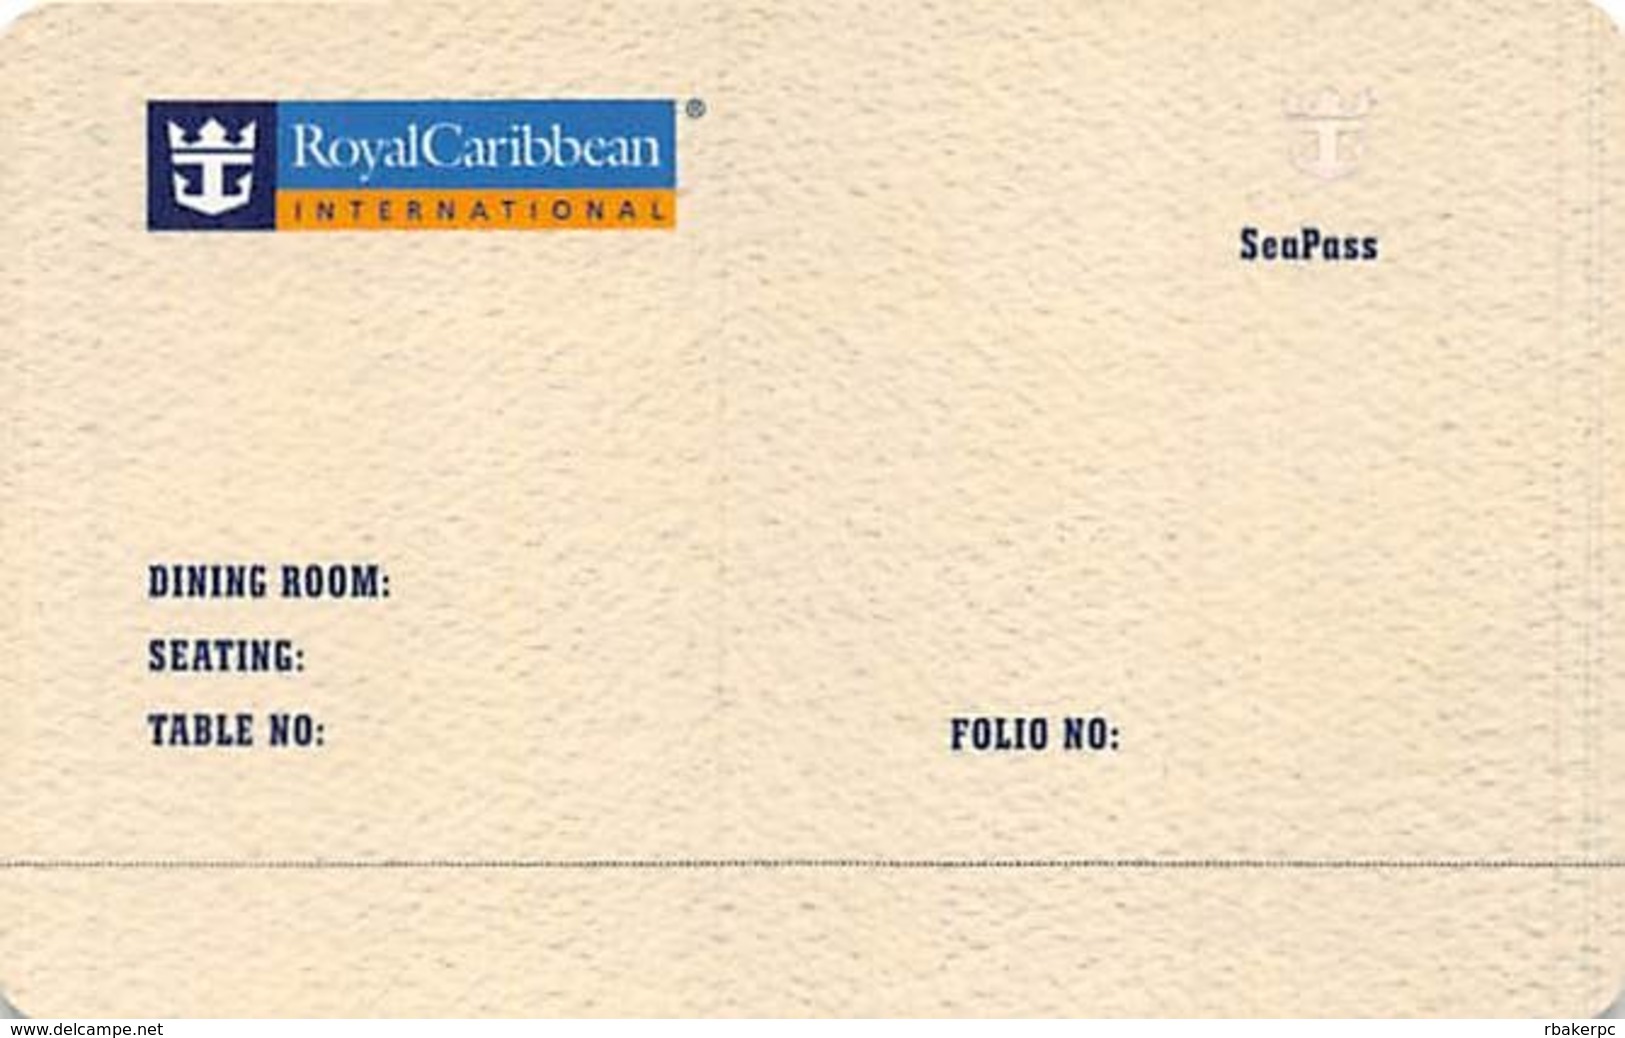 Royal Caribbean Cruises - Blank SeaPass Card With PN 60A083-S - Hotel Keycards